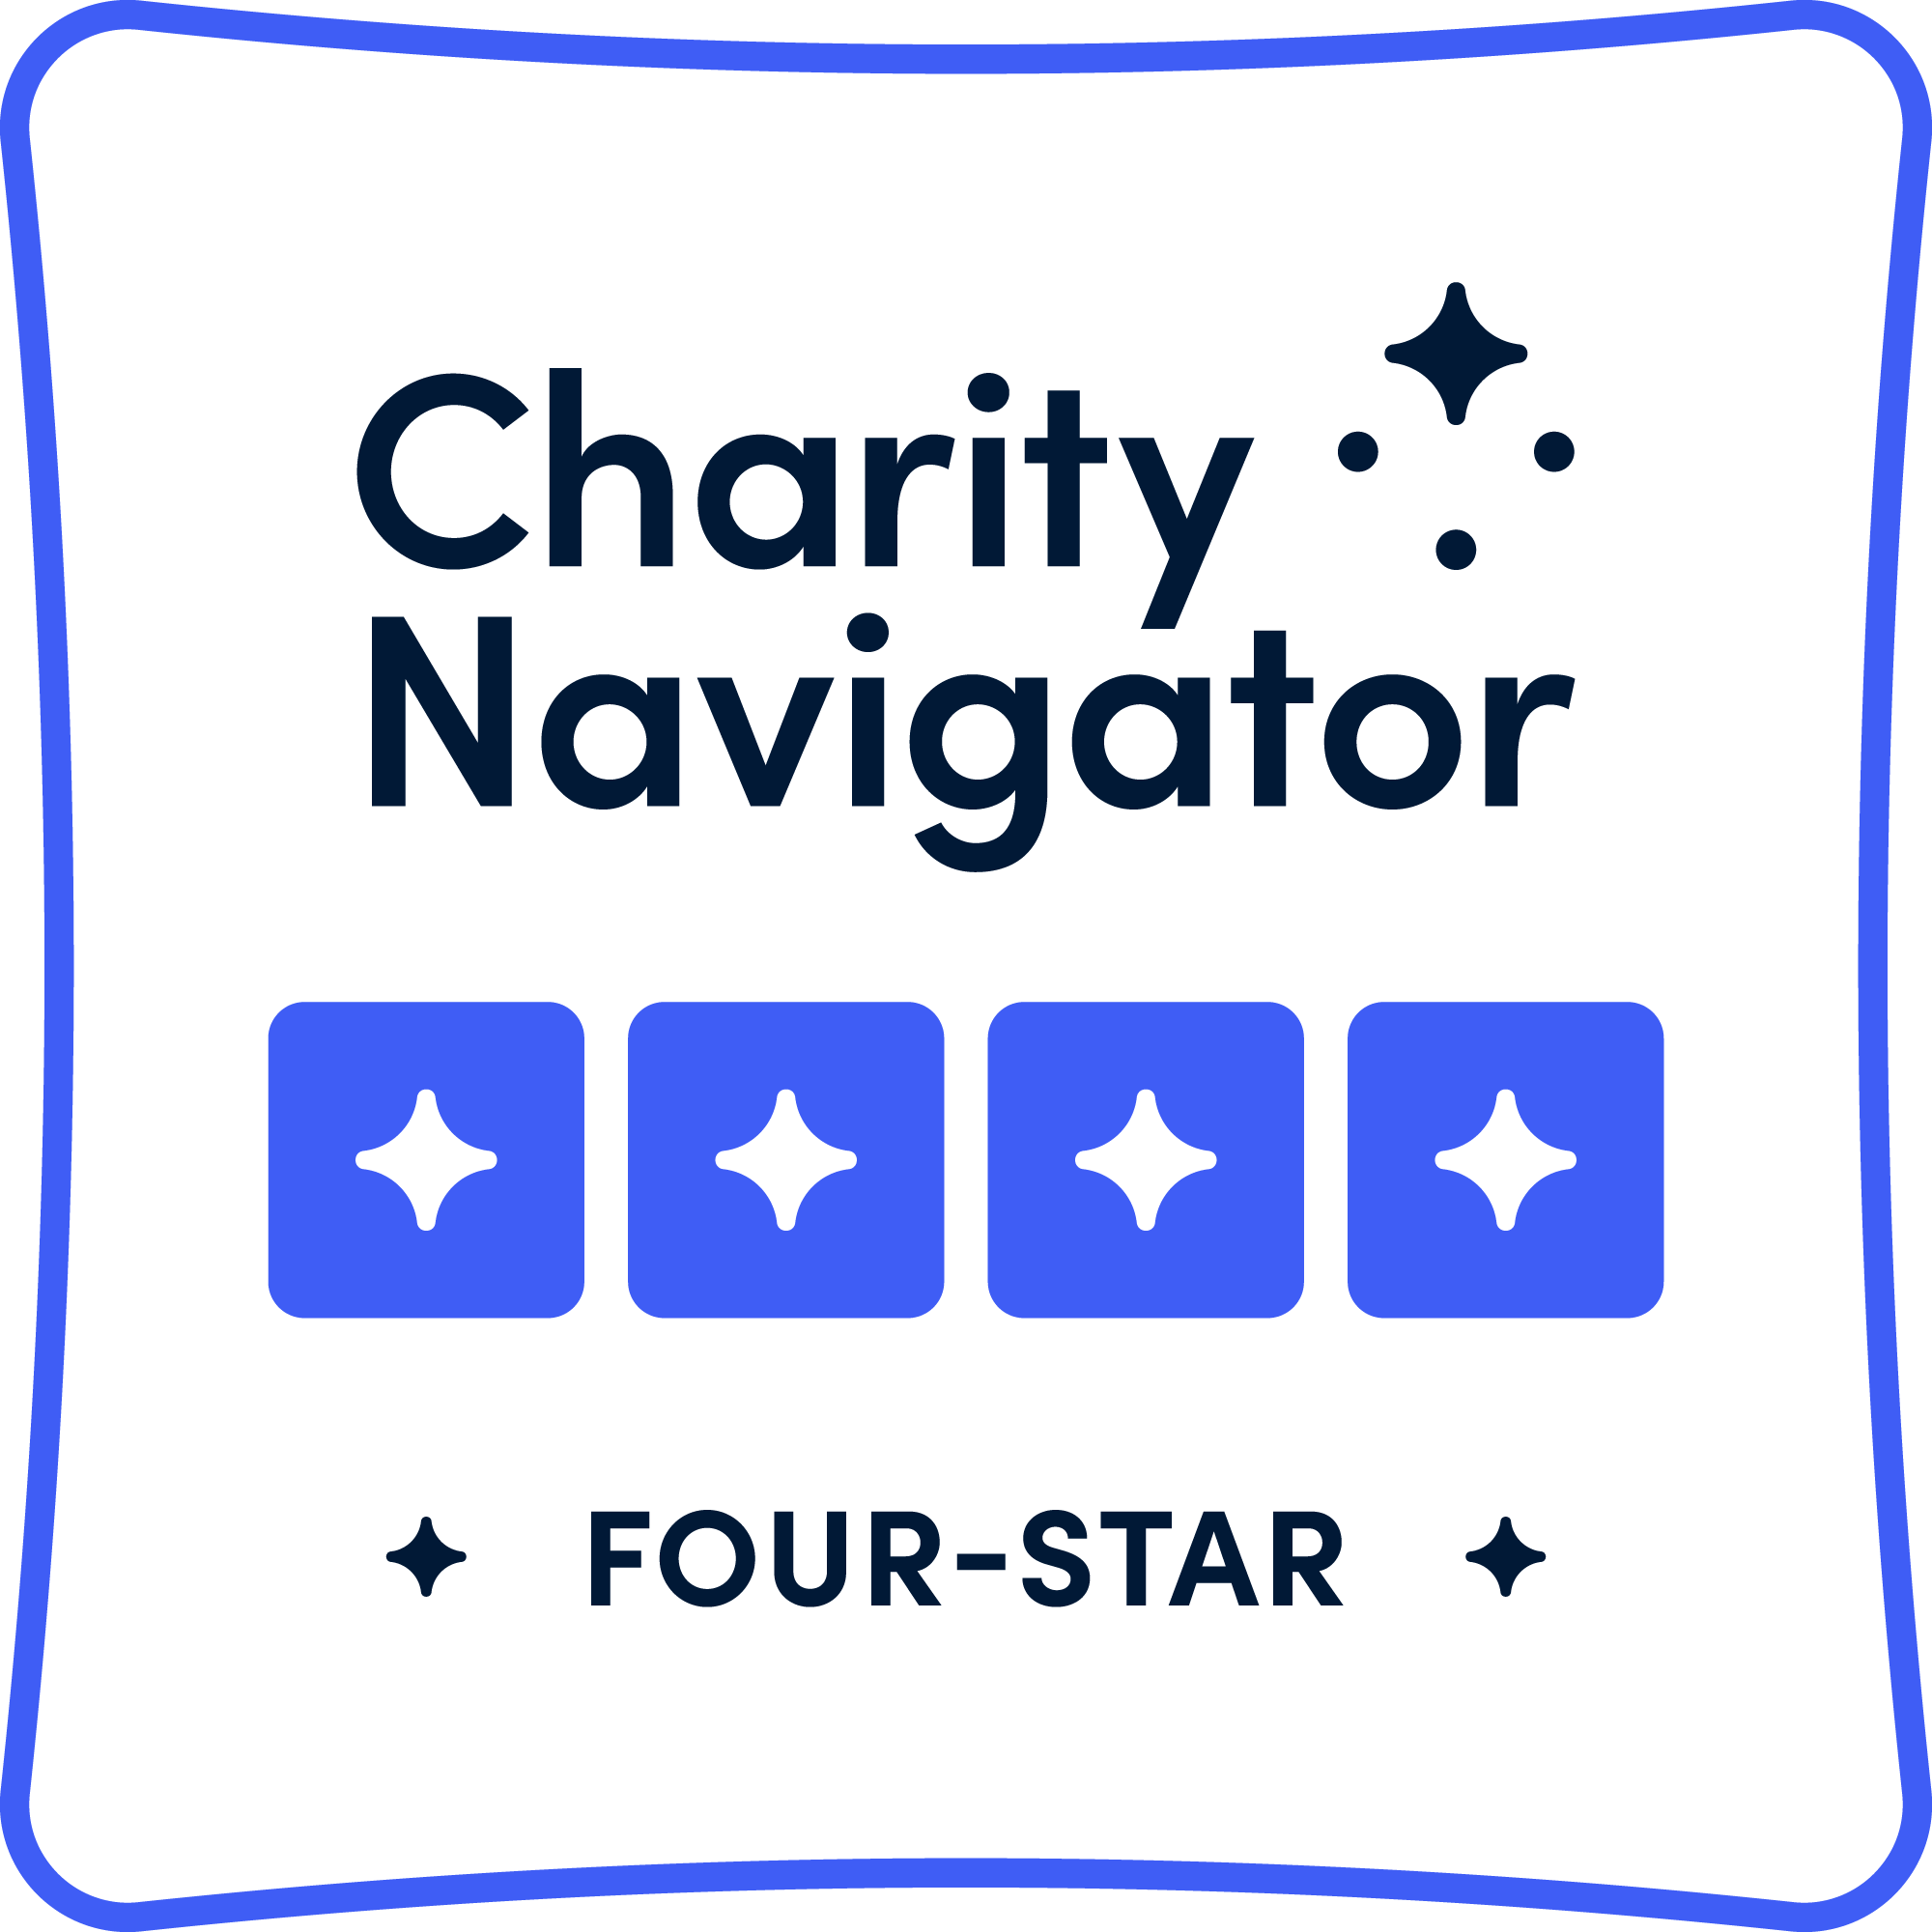 Charity Navigator badge - Four-star